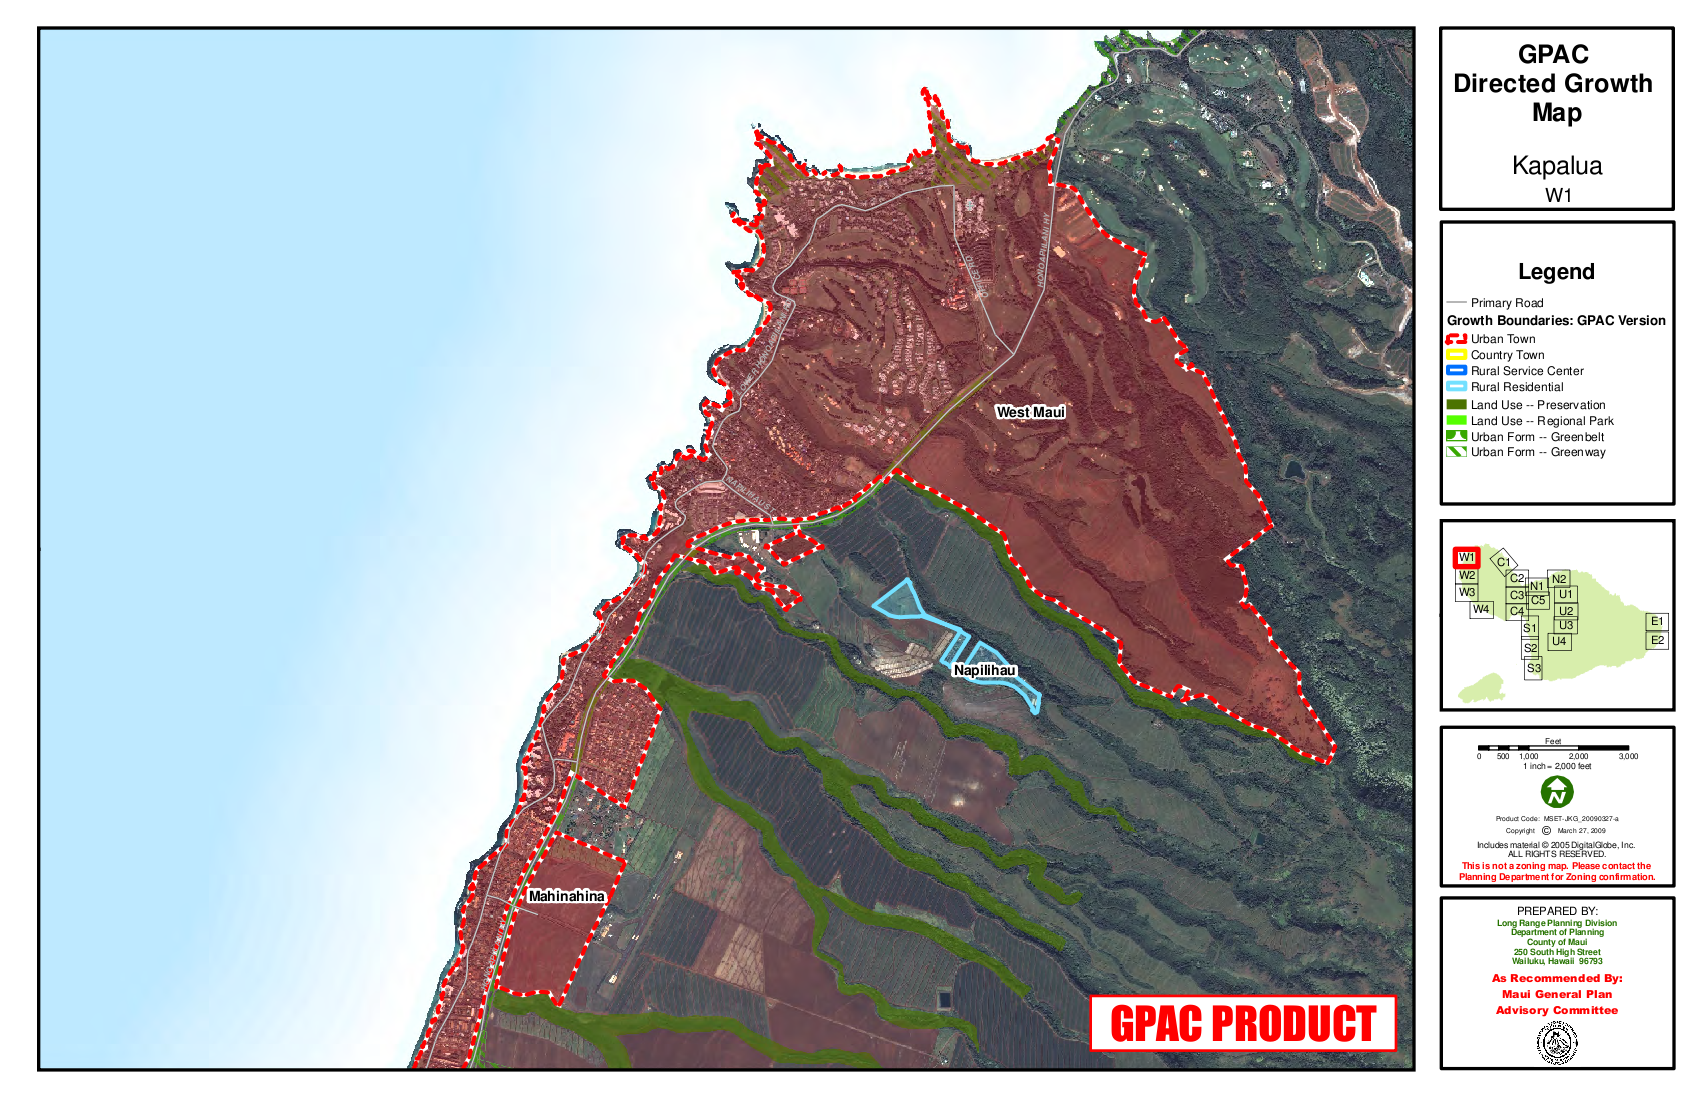 GPAC Directed Growth Map Kapalua